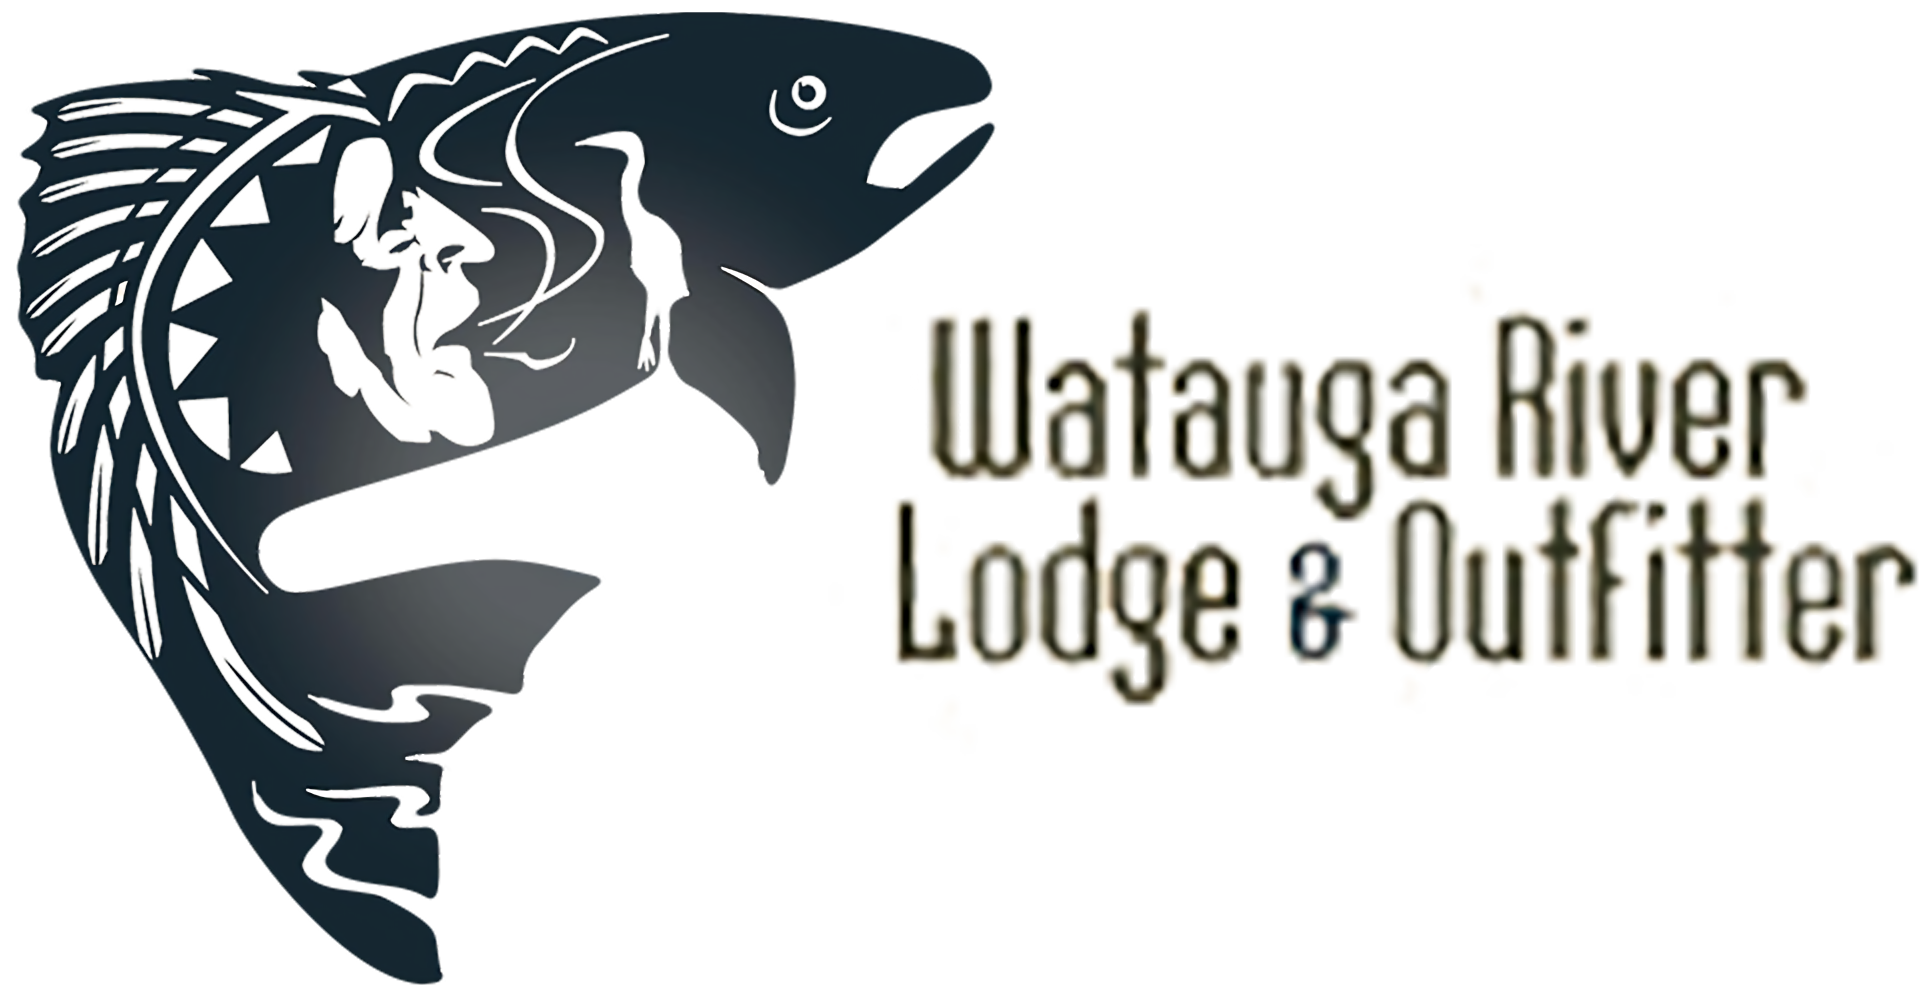 Watauga River Lodge